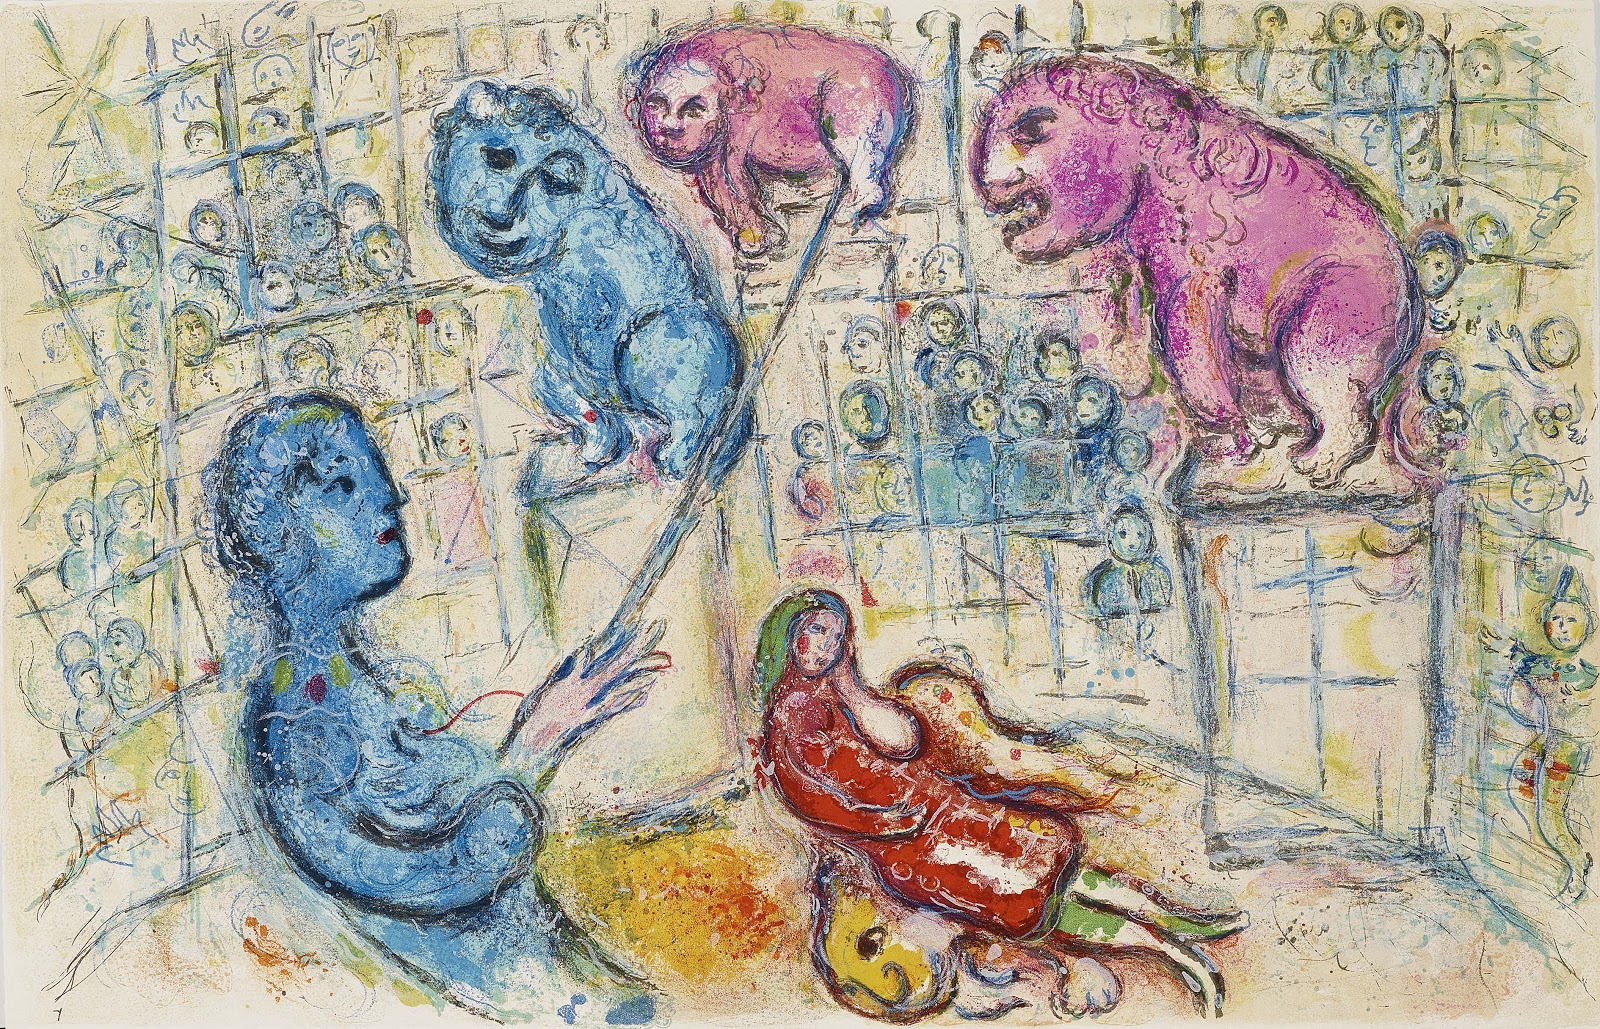 Marc+Chagall-1887-1985 (60).jpg